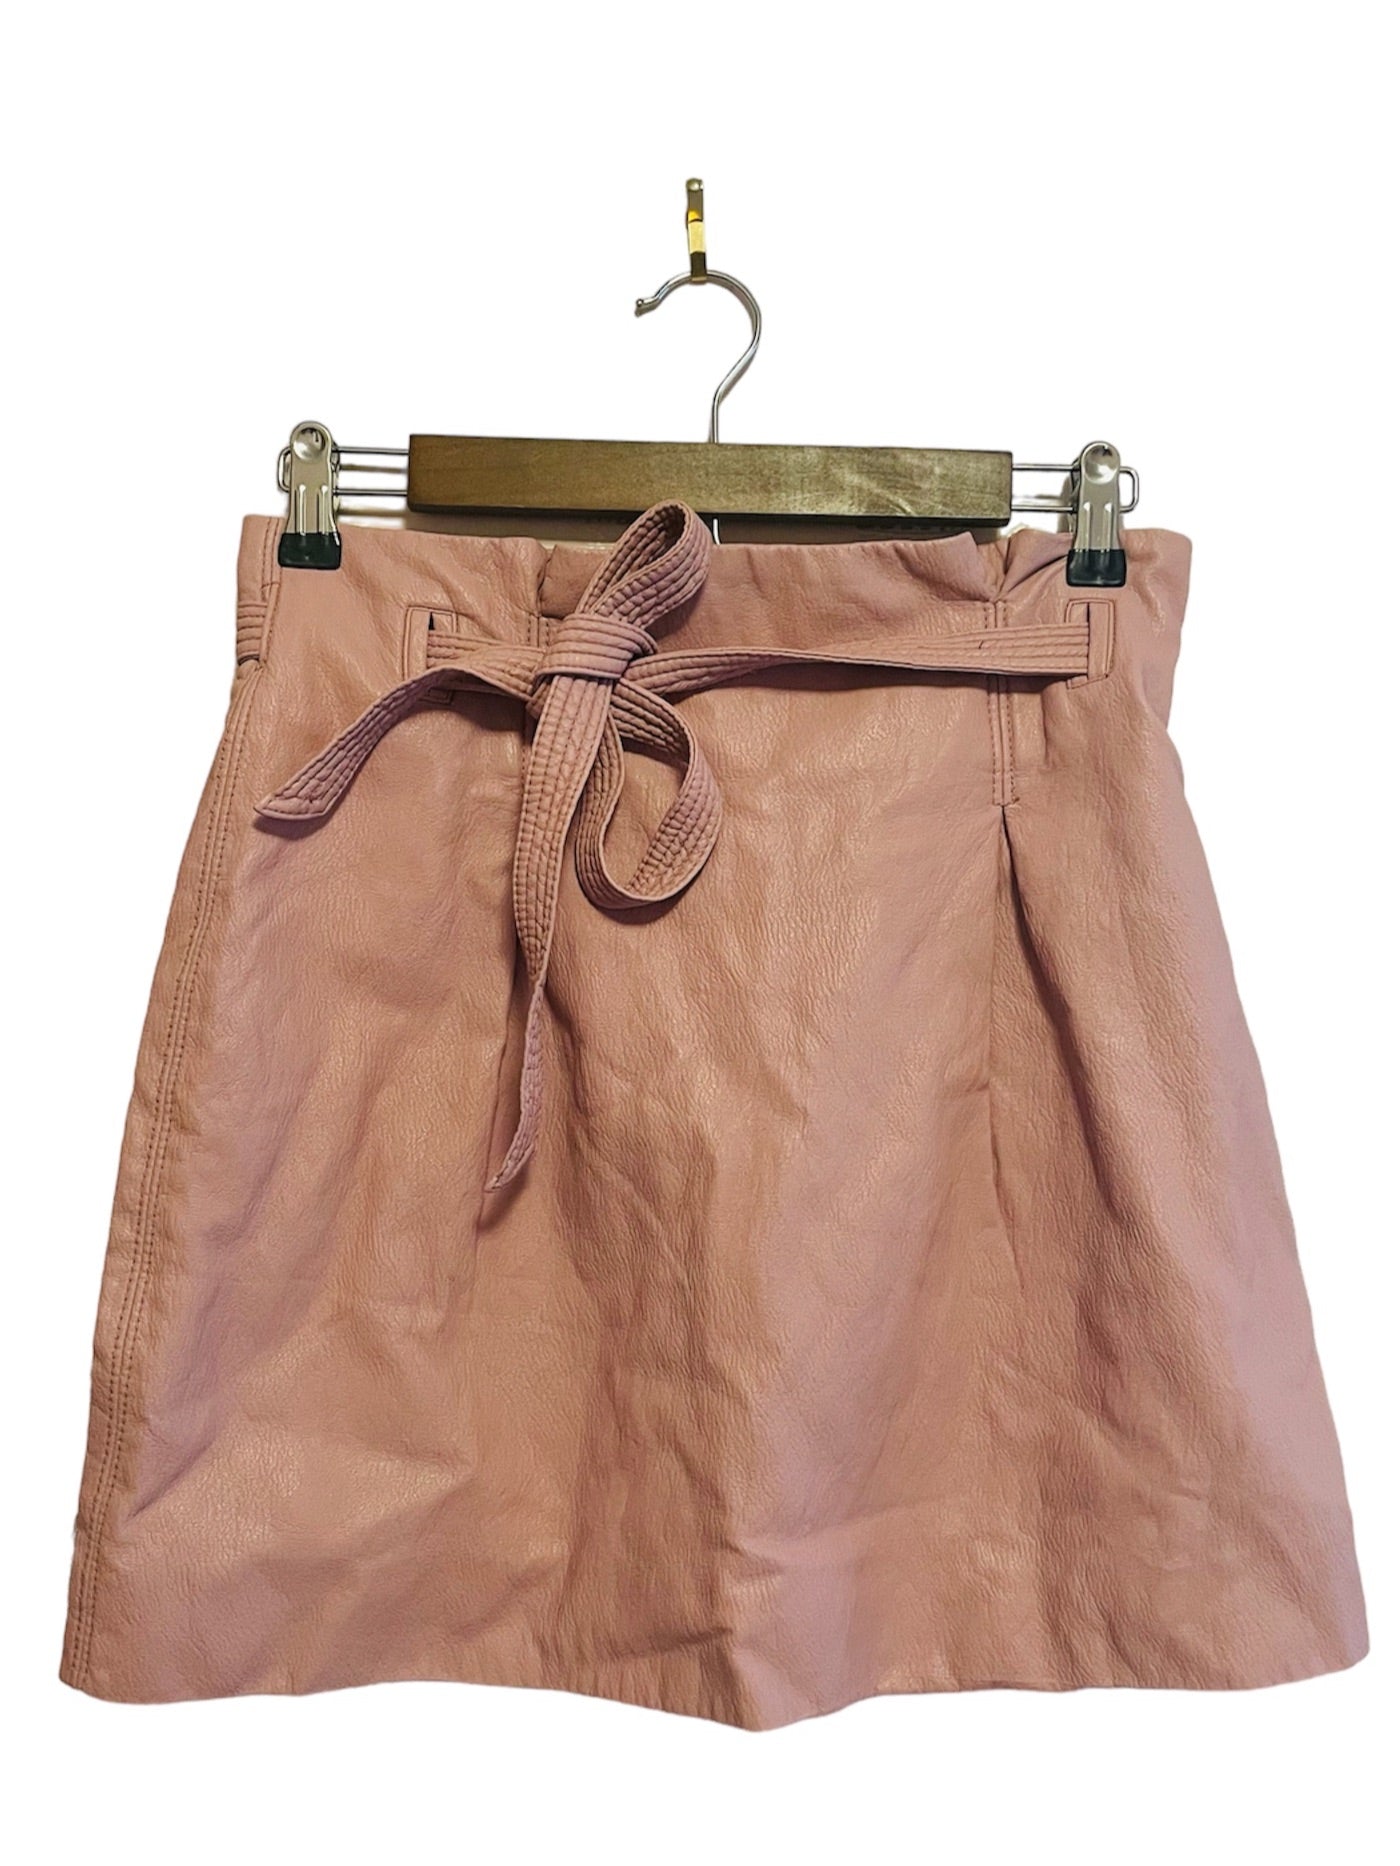 Leather Dusty Rose Mini Skirt Size: 4